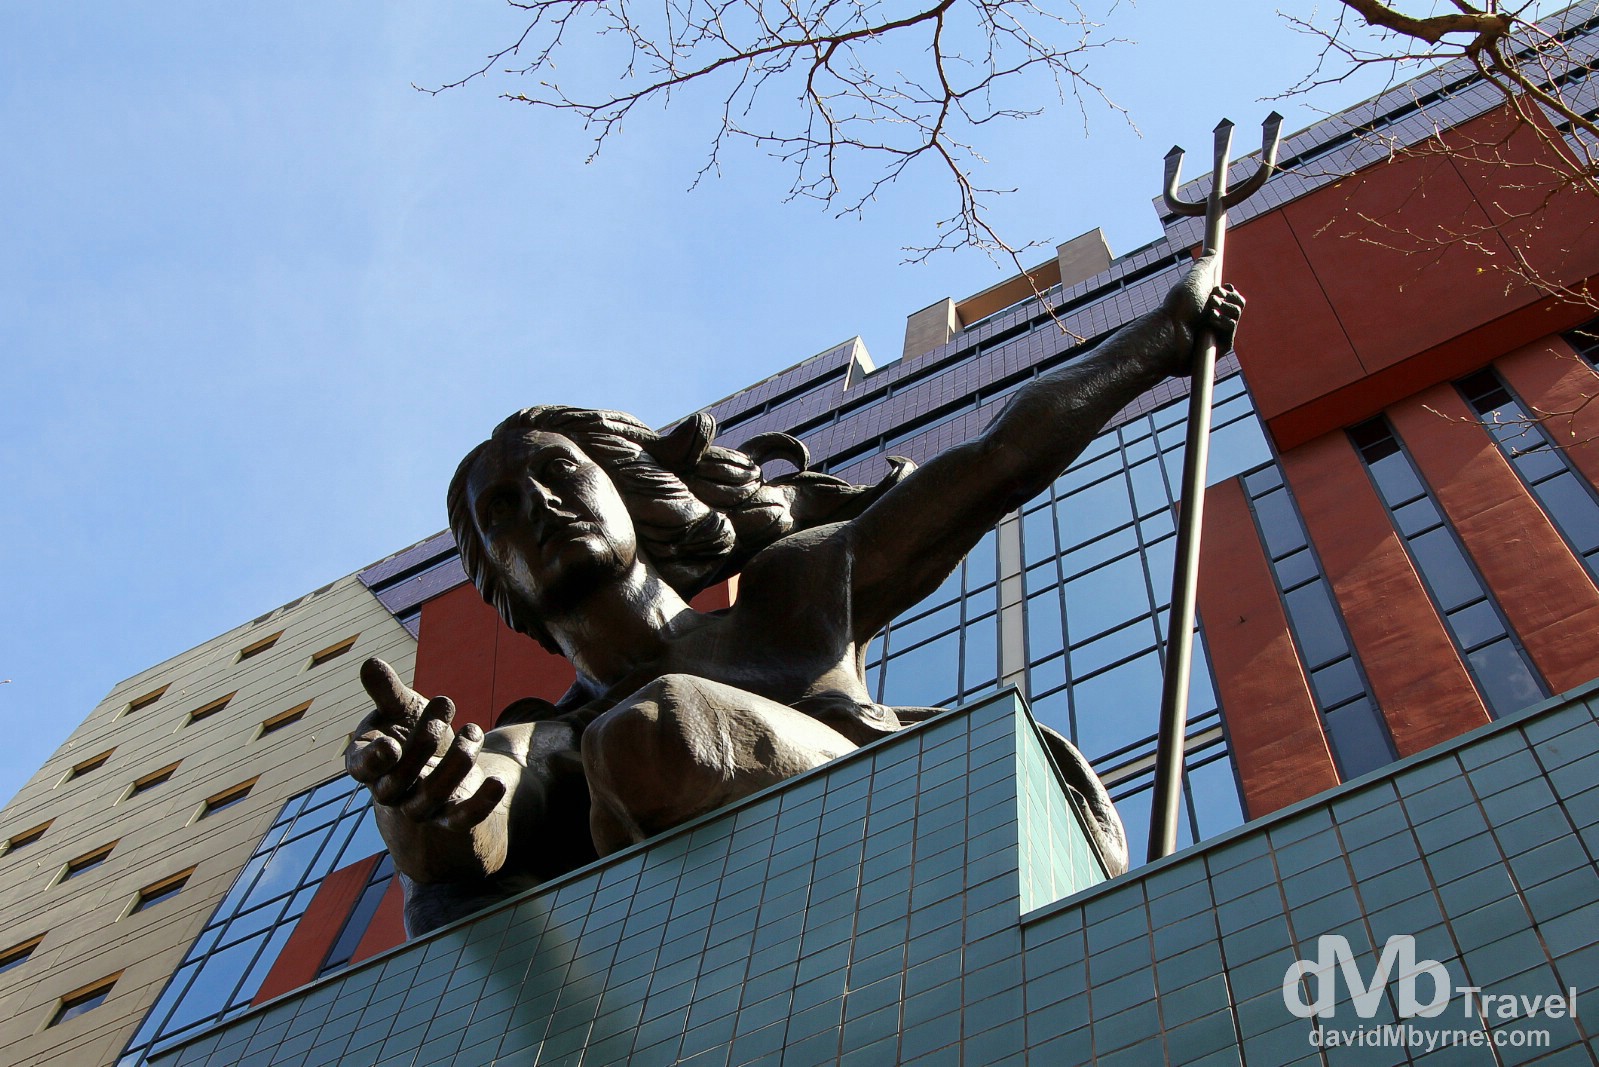 The Portlandia Statue on the facade of the Portland Building in Portland, Oregon, USA. March 28, 2013.